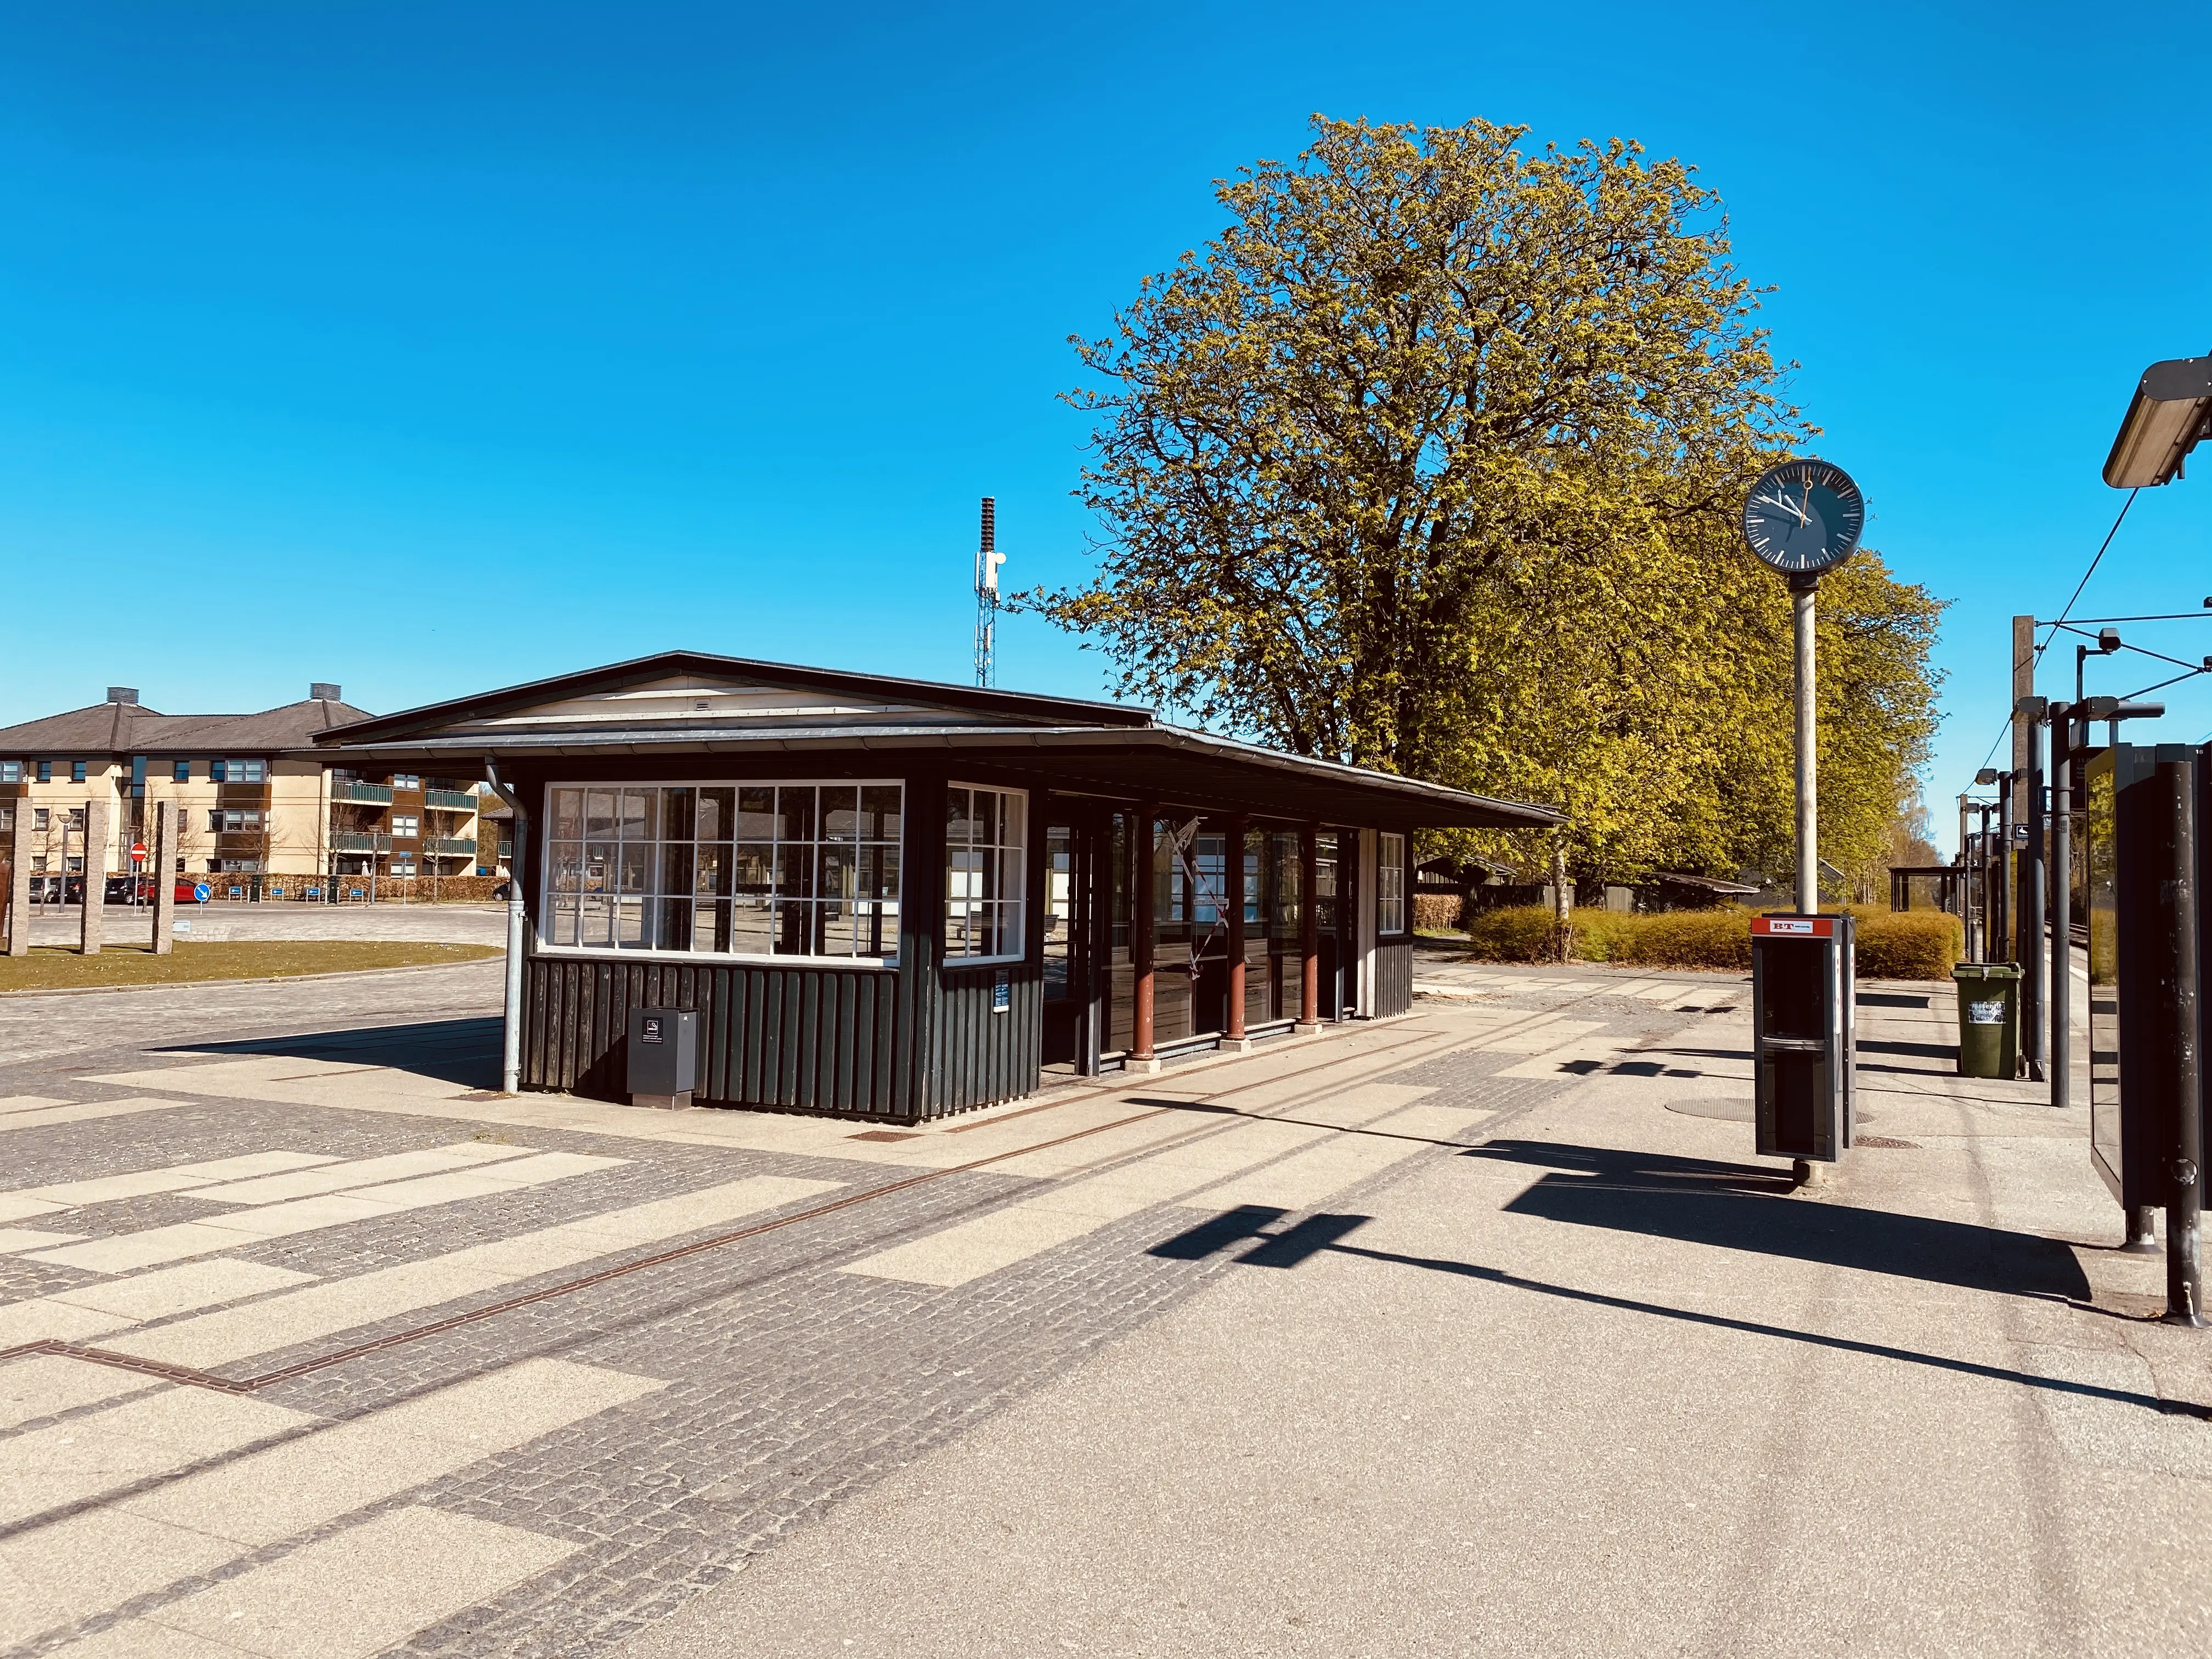 Humlebæk Station.